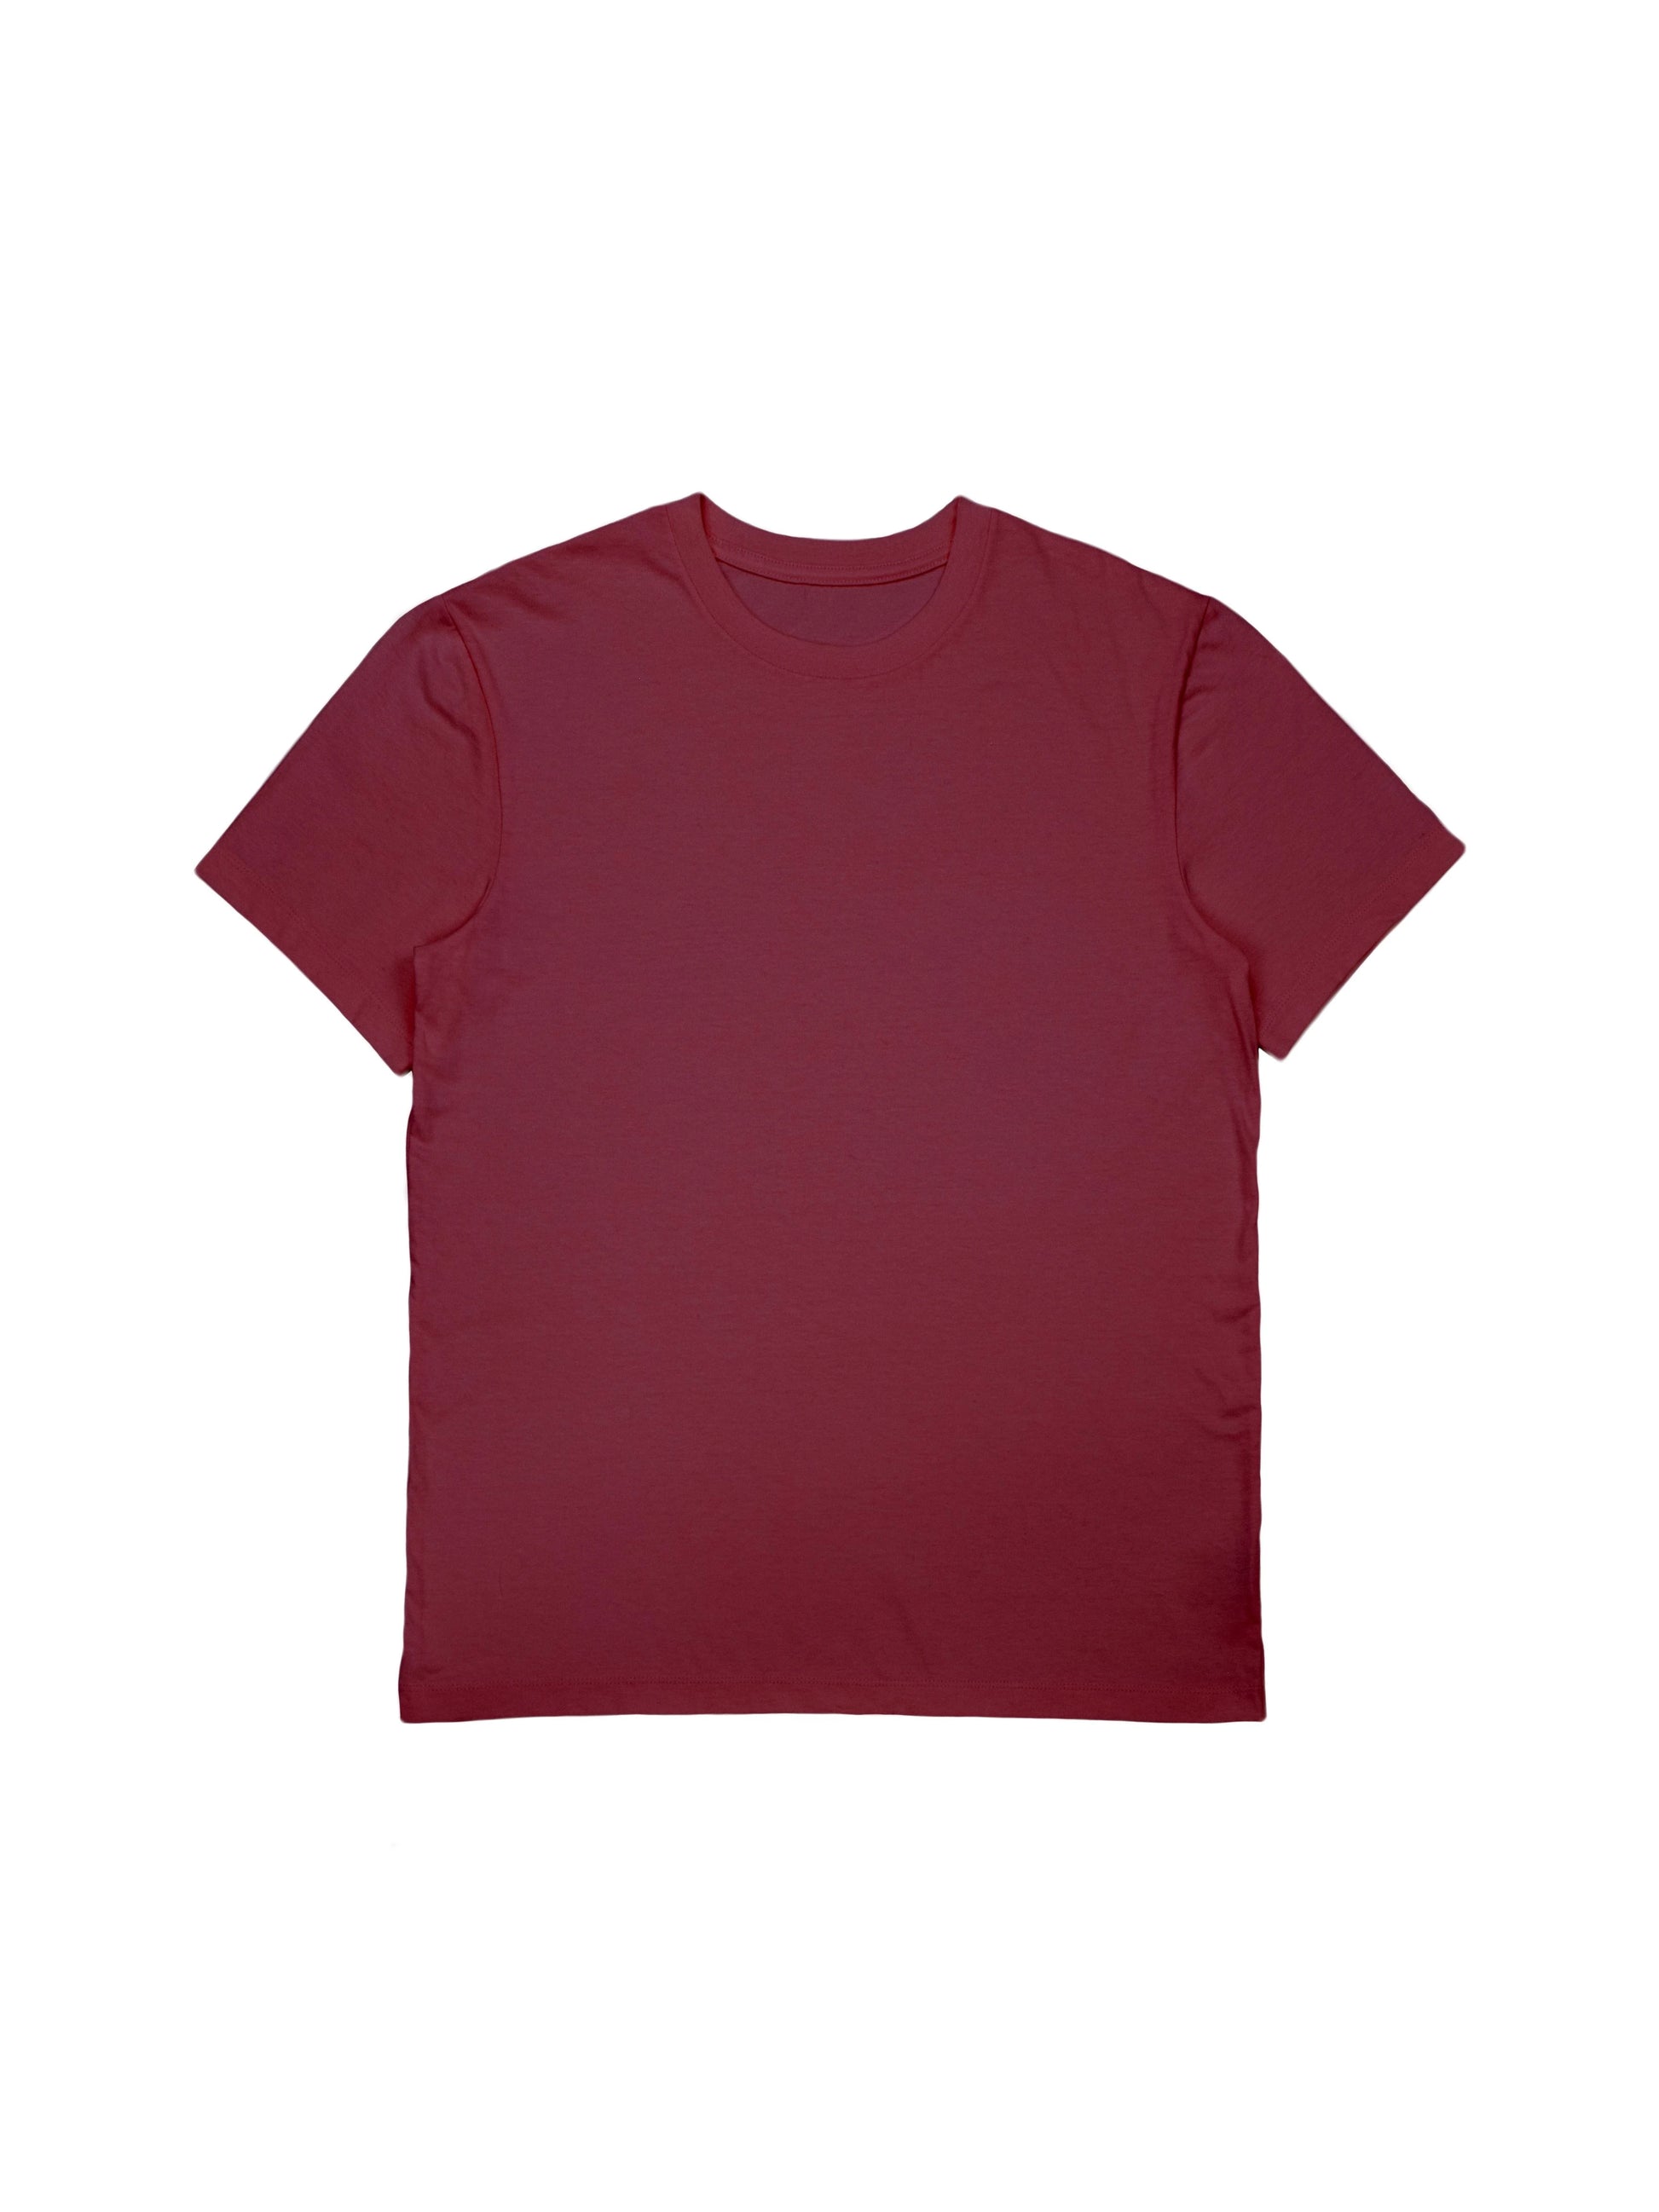 Essential T Shirt Cotton Rib Scoop Neck Short Sleeve Tees Tops